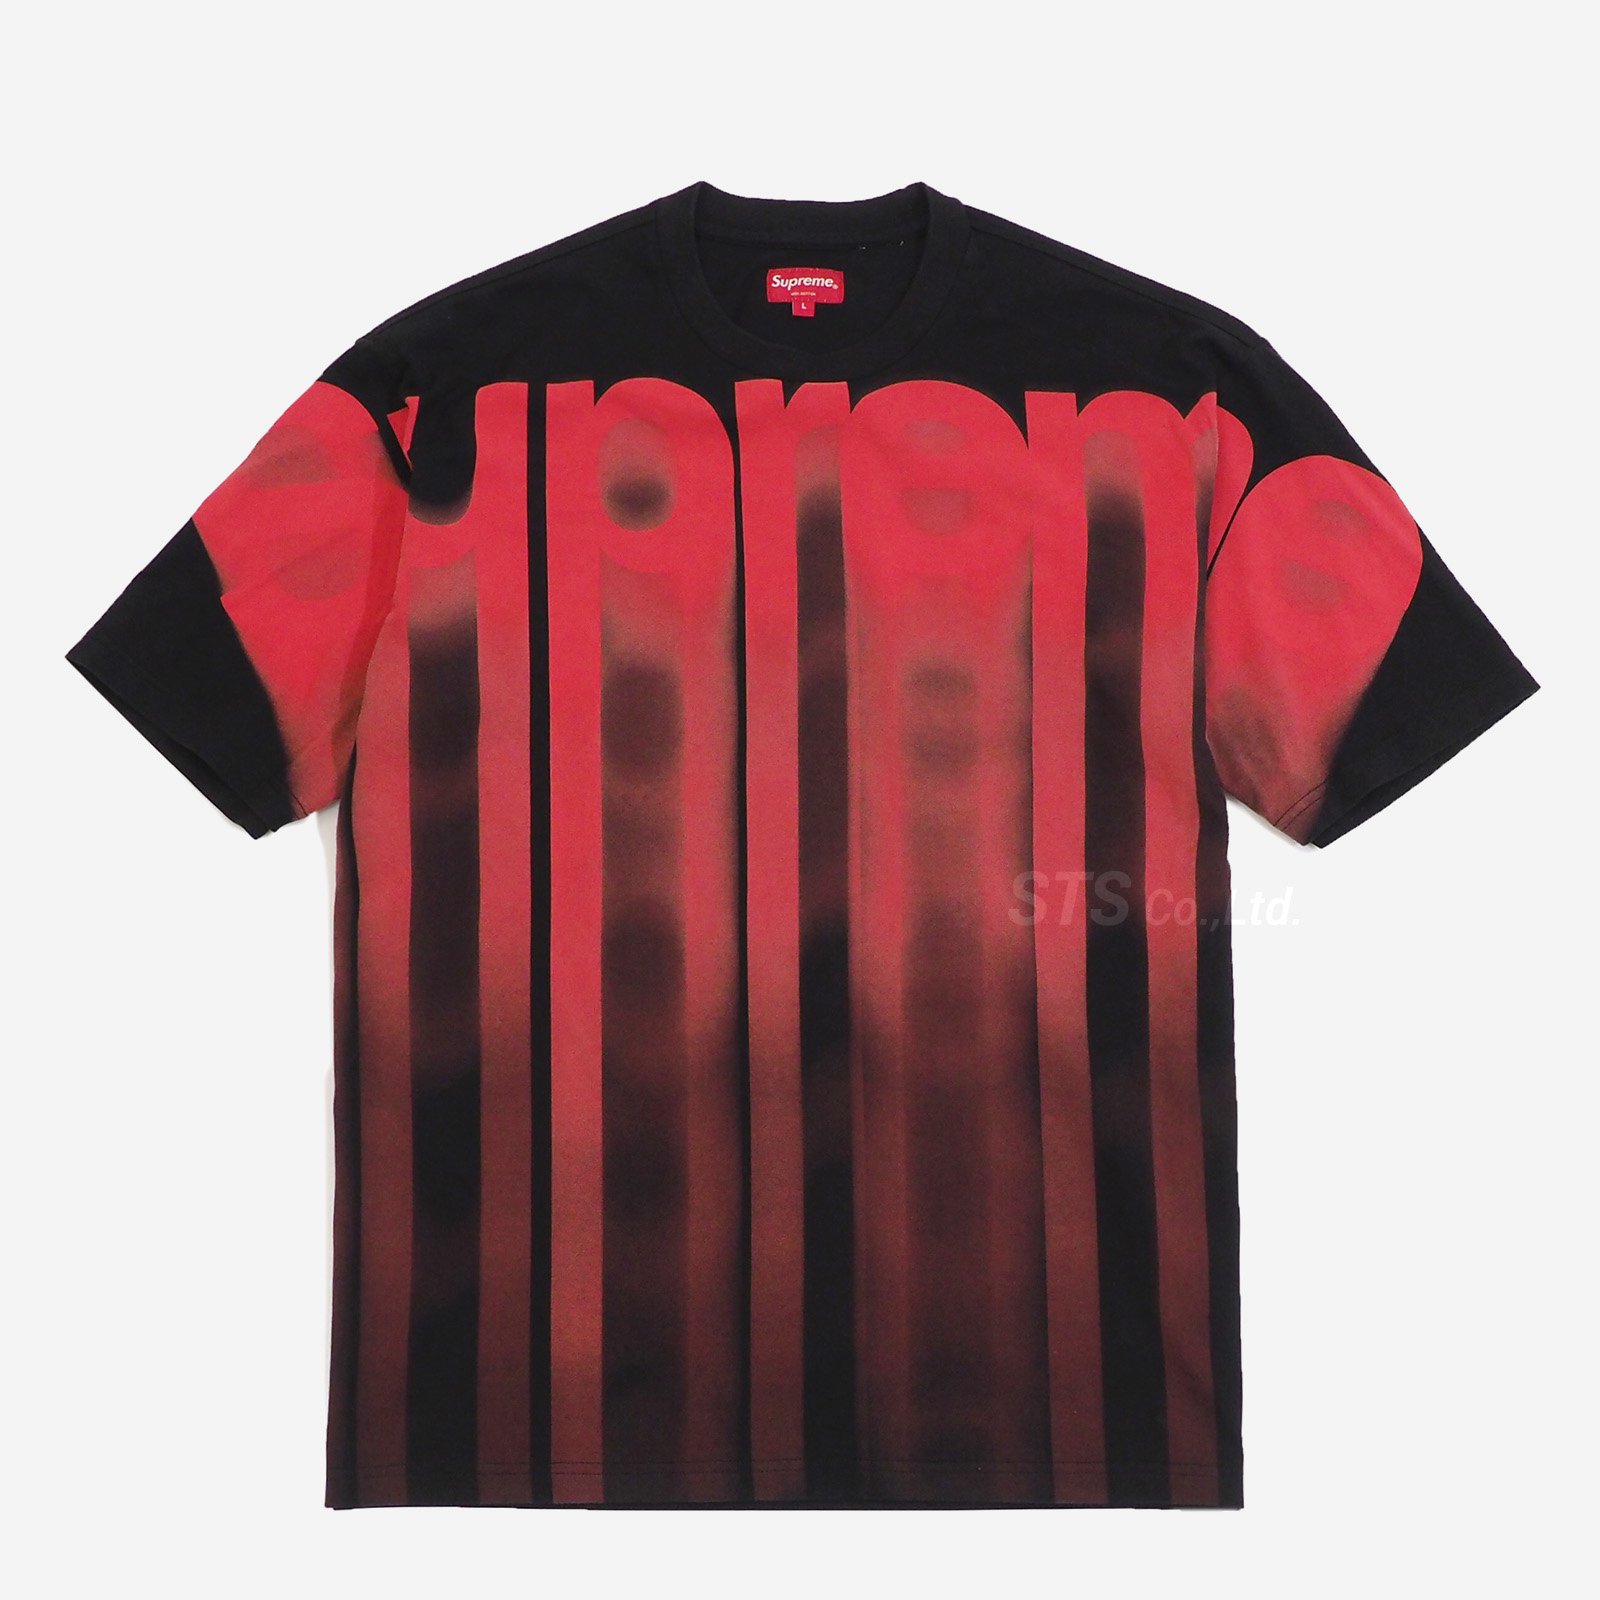 M送込!! Supreme Bleed Logo Tシャツ黒赤20aw